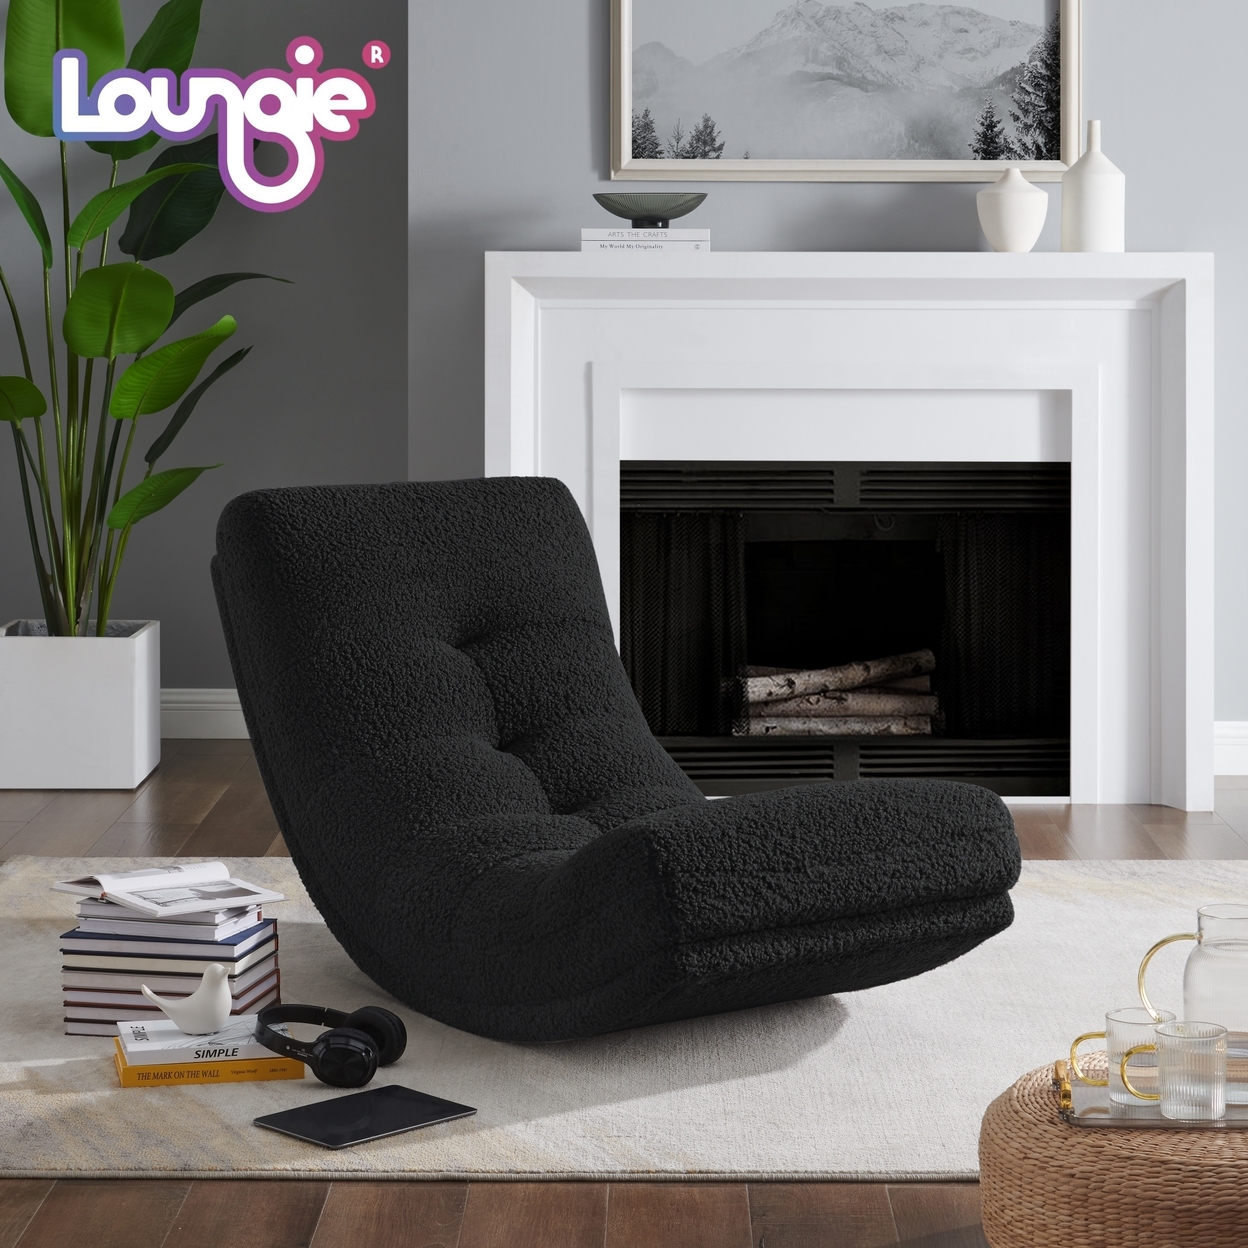 Kaniya Chair - Sherpa Upholstery, Tufted, Gentle Rocking Design, Ergonomic Shape And Padded Seat - Black